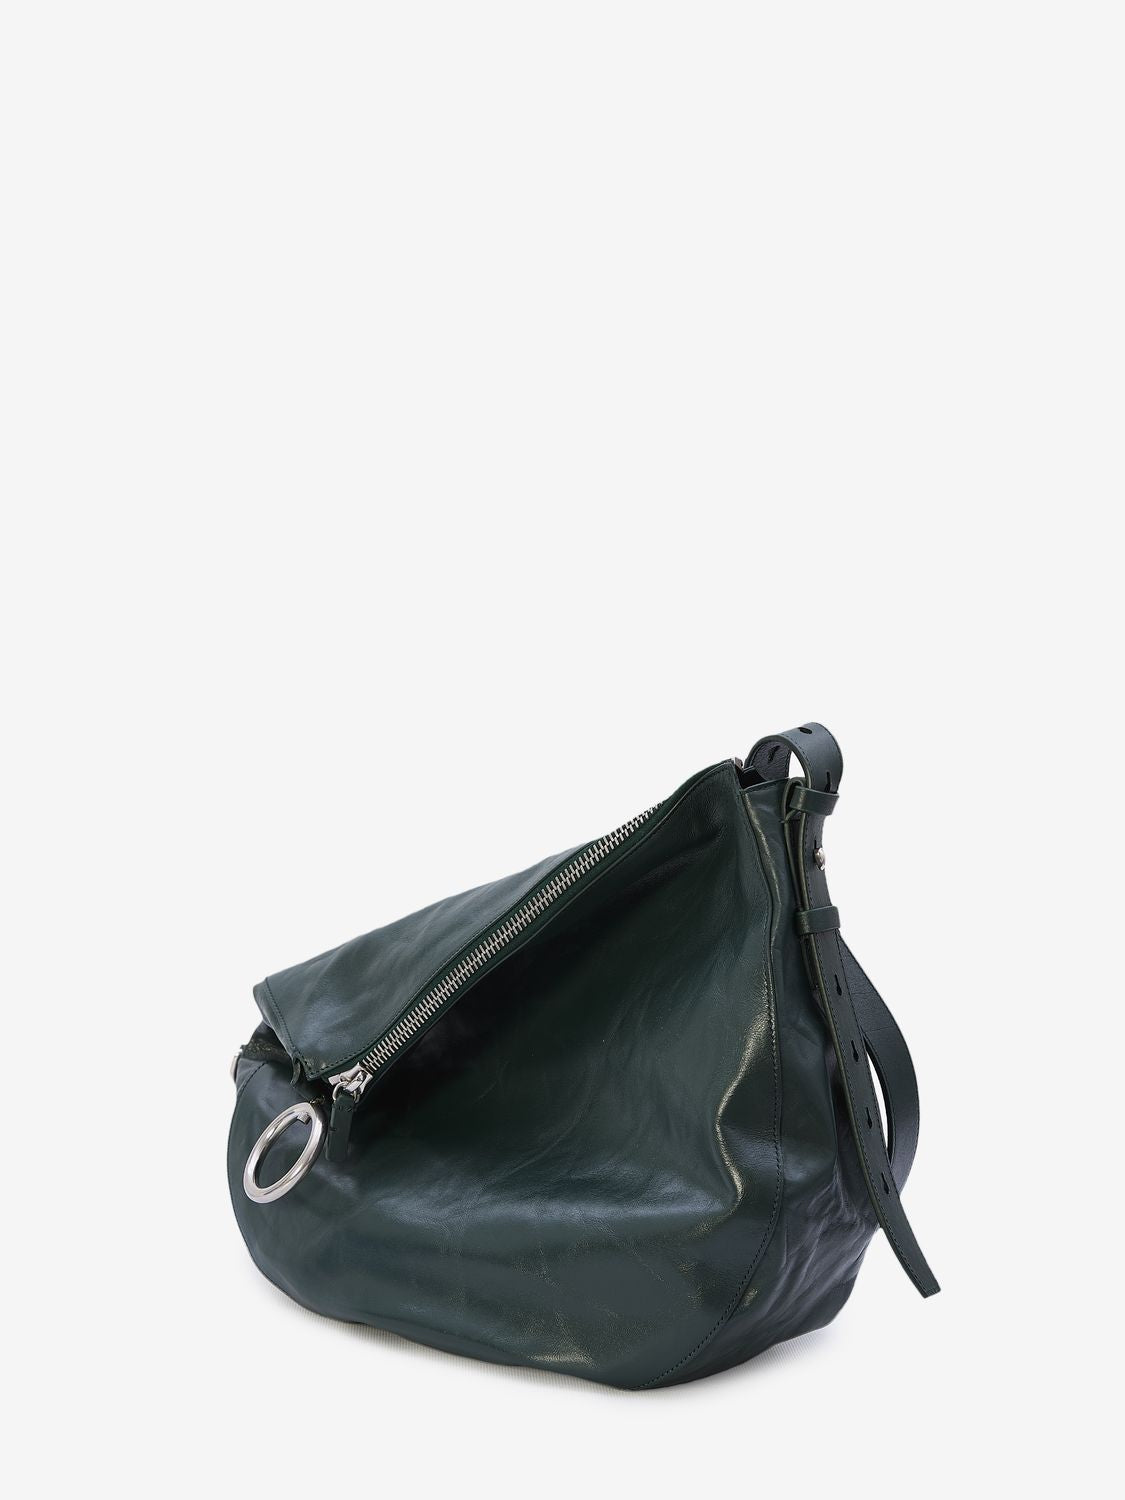 Green Crinkled Calfskin Medium Knight Handbag with Silver-Tone Horse Clip